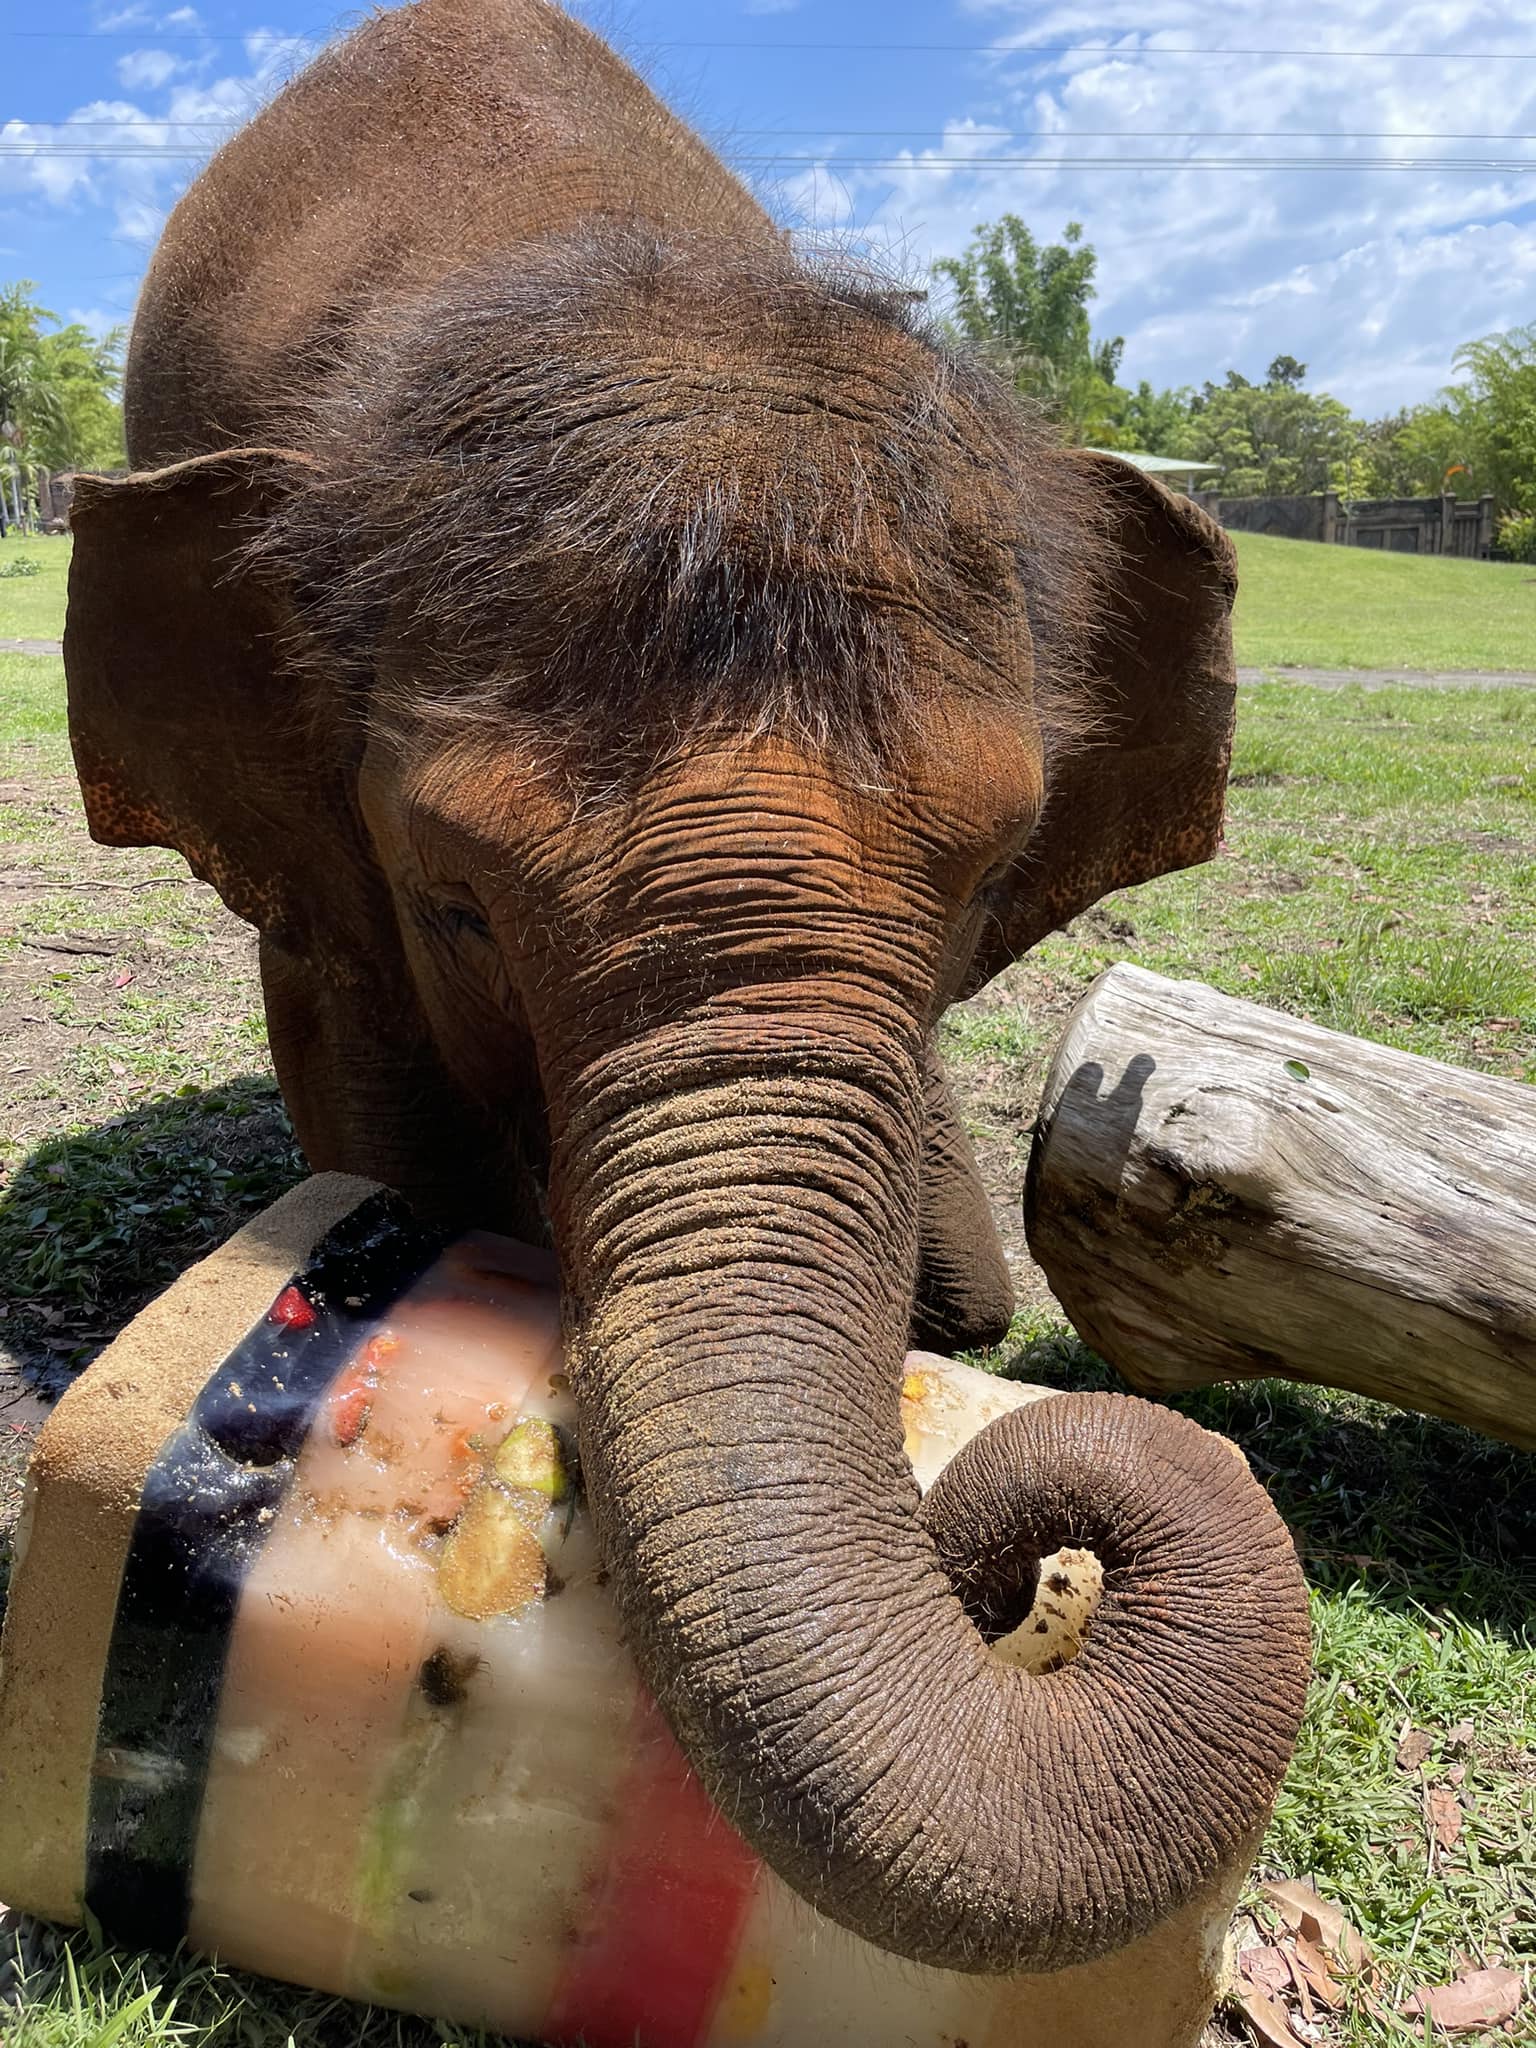 A Sumatran elephant eats a giant ice block in a park.